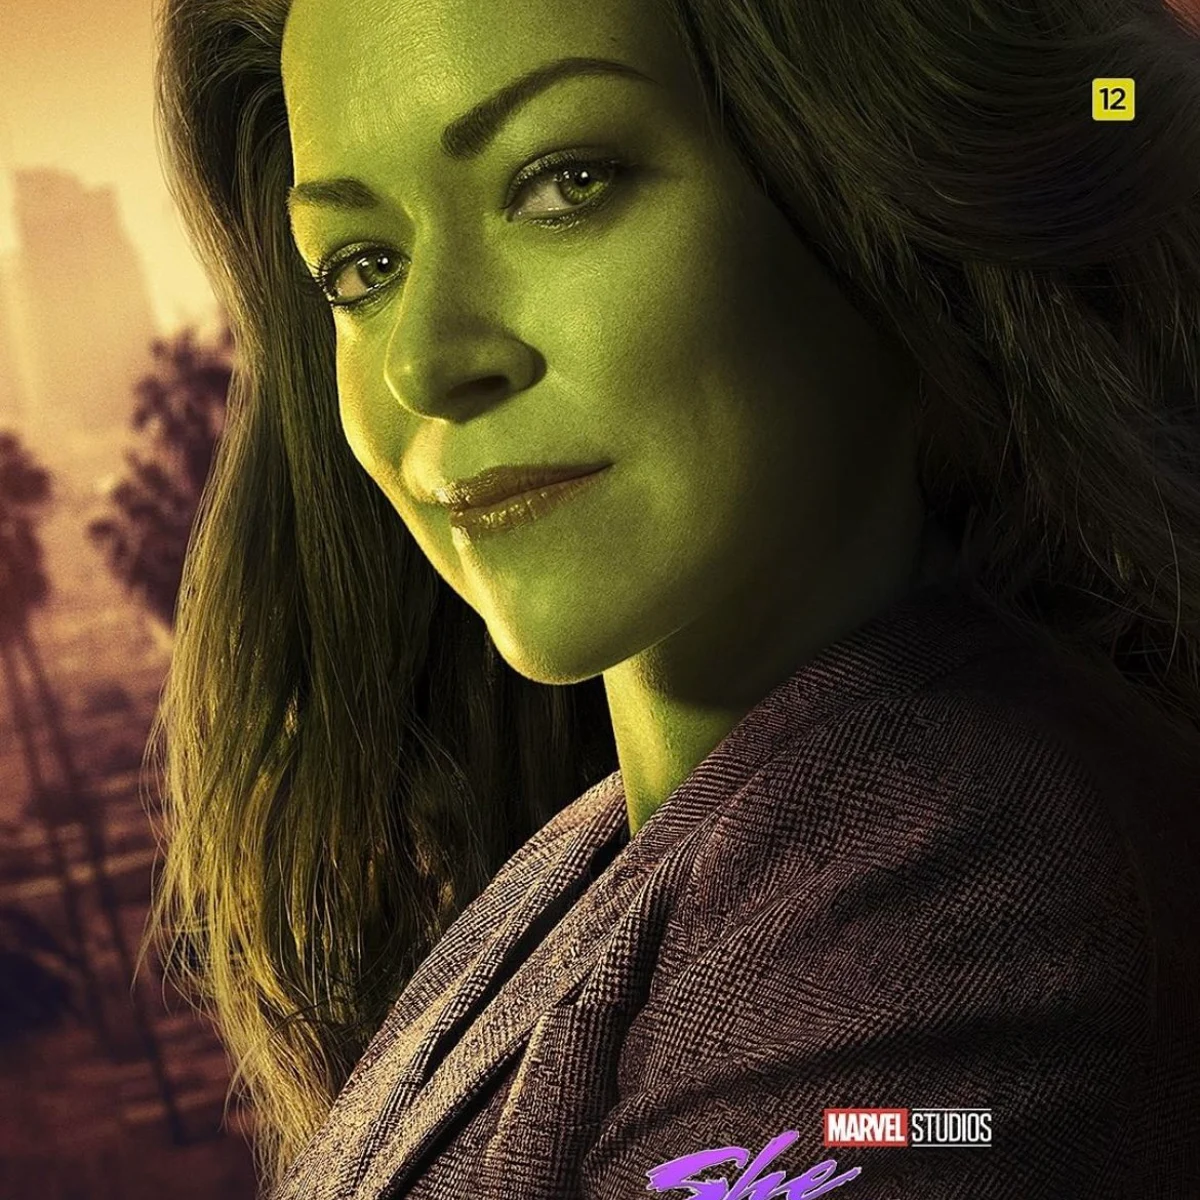 She-Hulk: Abogada Hulka – Serie Disney Plus – Crítica – Una broma sin  gracia y otro fracaso de Marvel – Ocio World